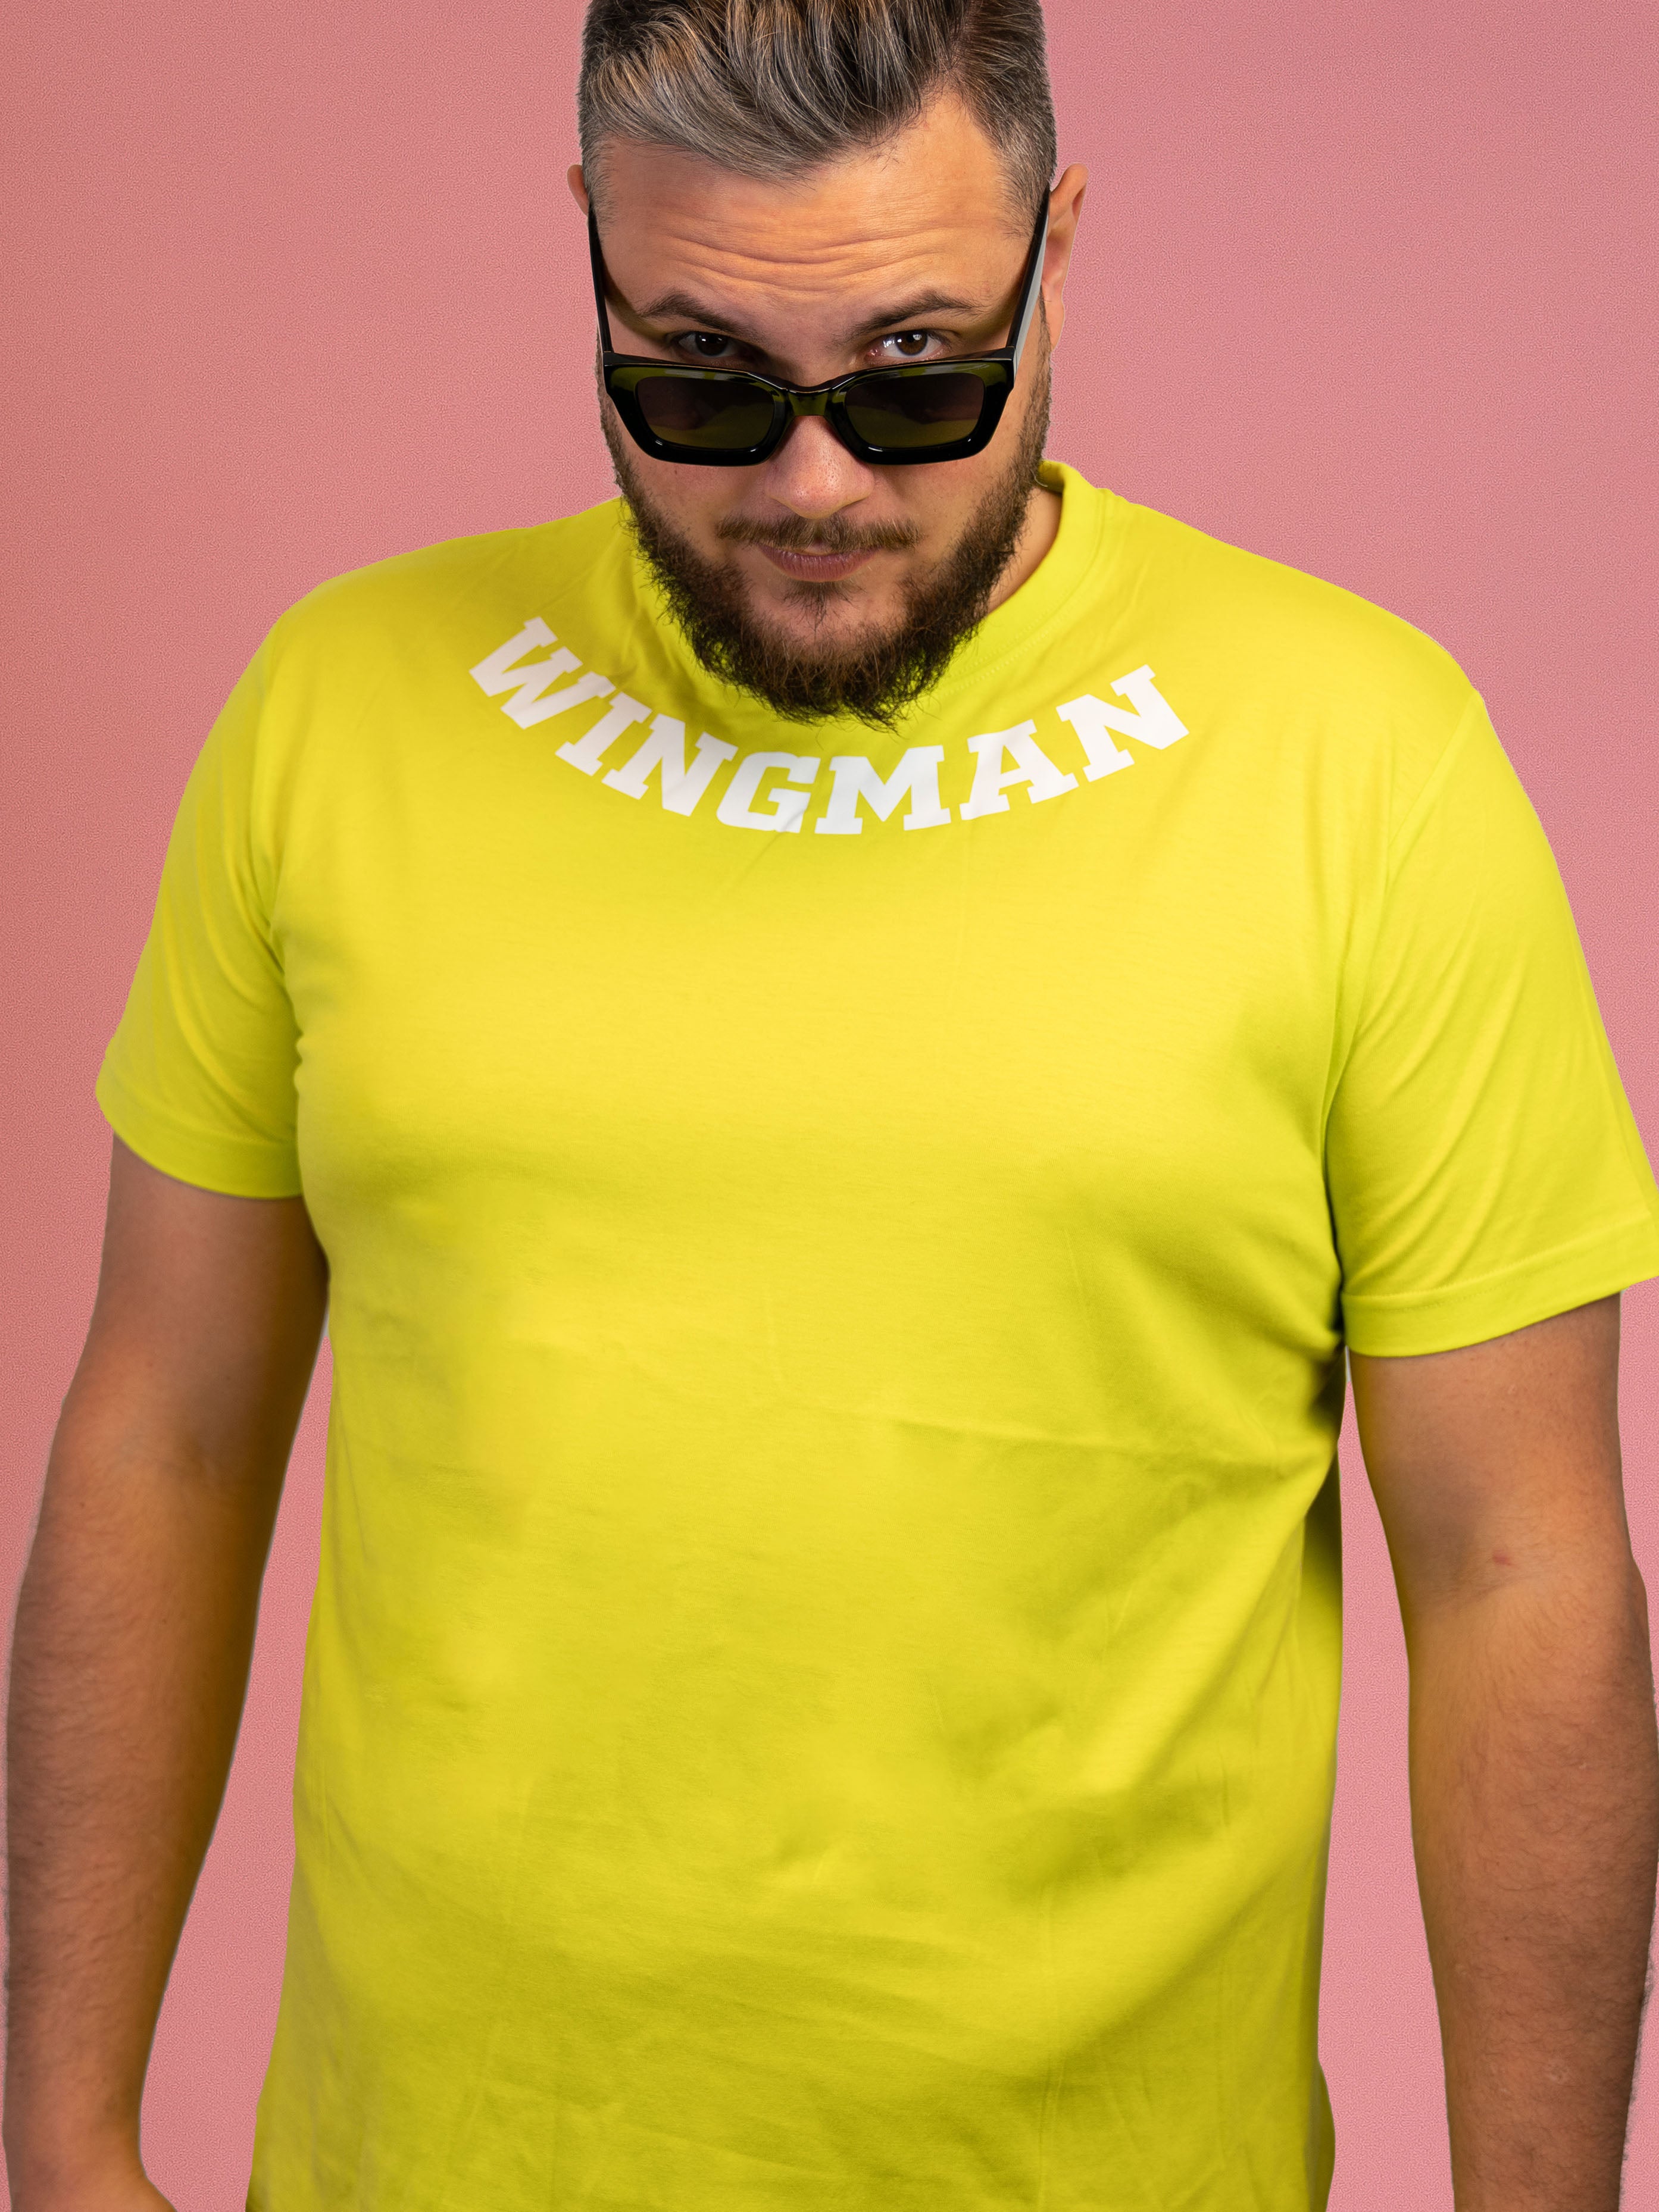 Wingman T-shirt